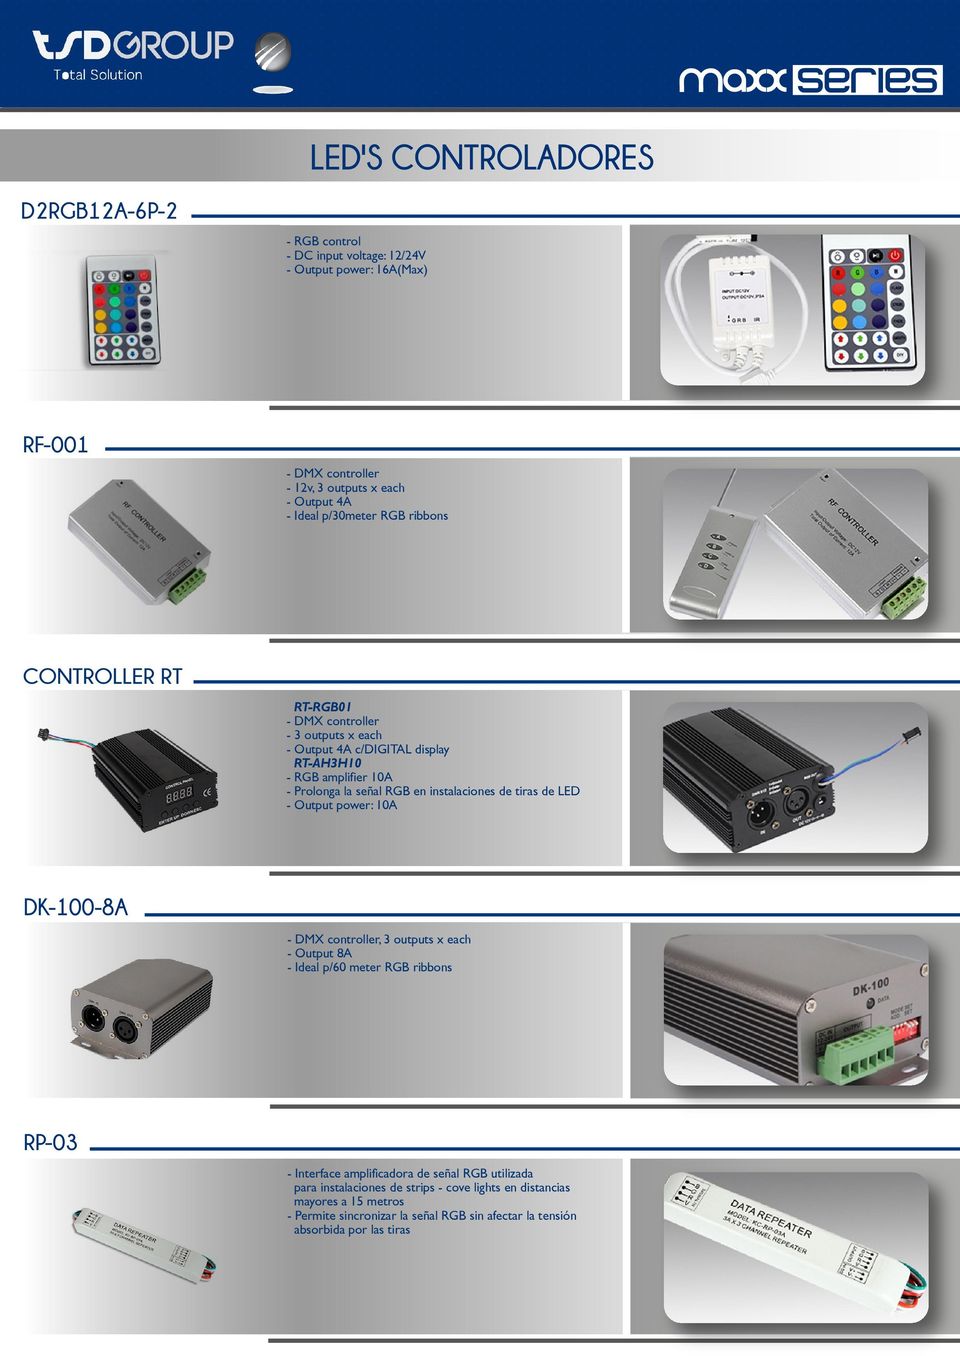 instalaciones de tiras de LED - Output power: 10A DK-100-8A - DMX controller, 3 outputs x each - Output 8A - Ideal p/60 meter RGB ribbons RP-03 - Interface amplificadora